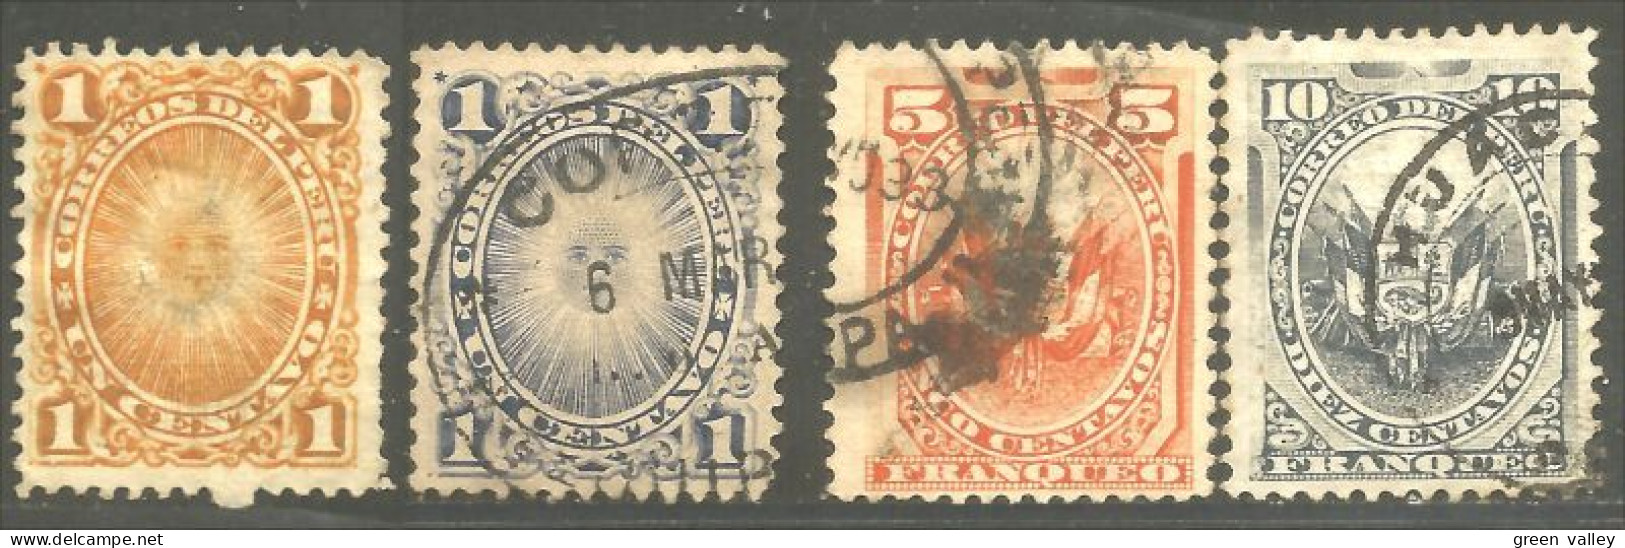 728 Peru 1874 4 Stamps Sun God Dieu Soleil Armoiries Coat Arms (PER-23) - Pérou